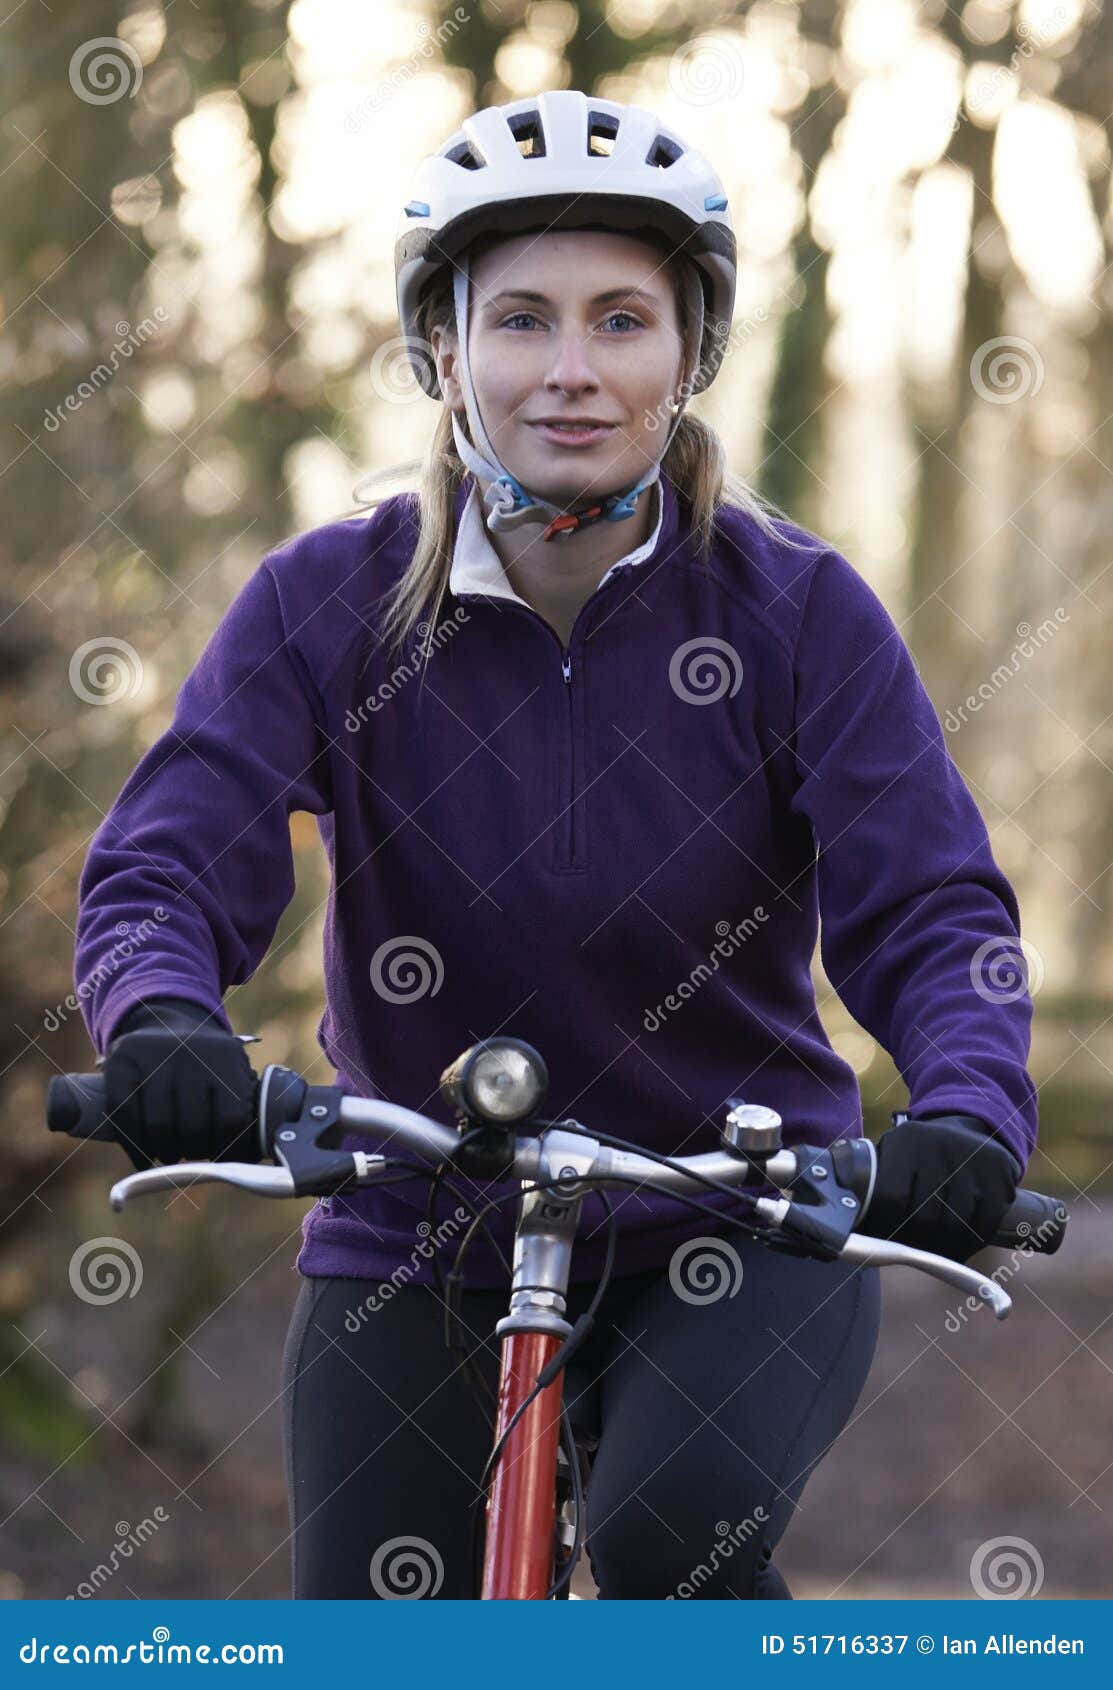 woman riding mountain bike through woodlands